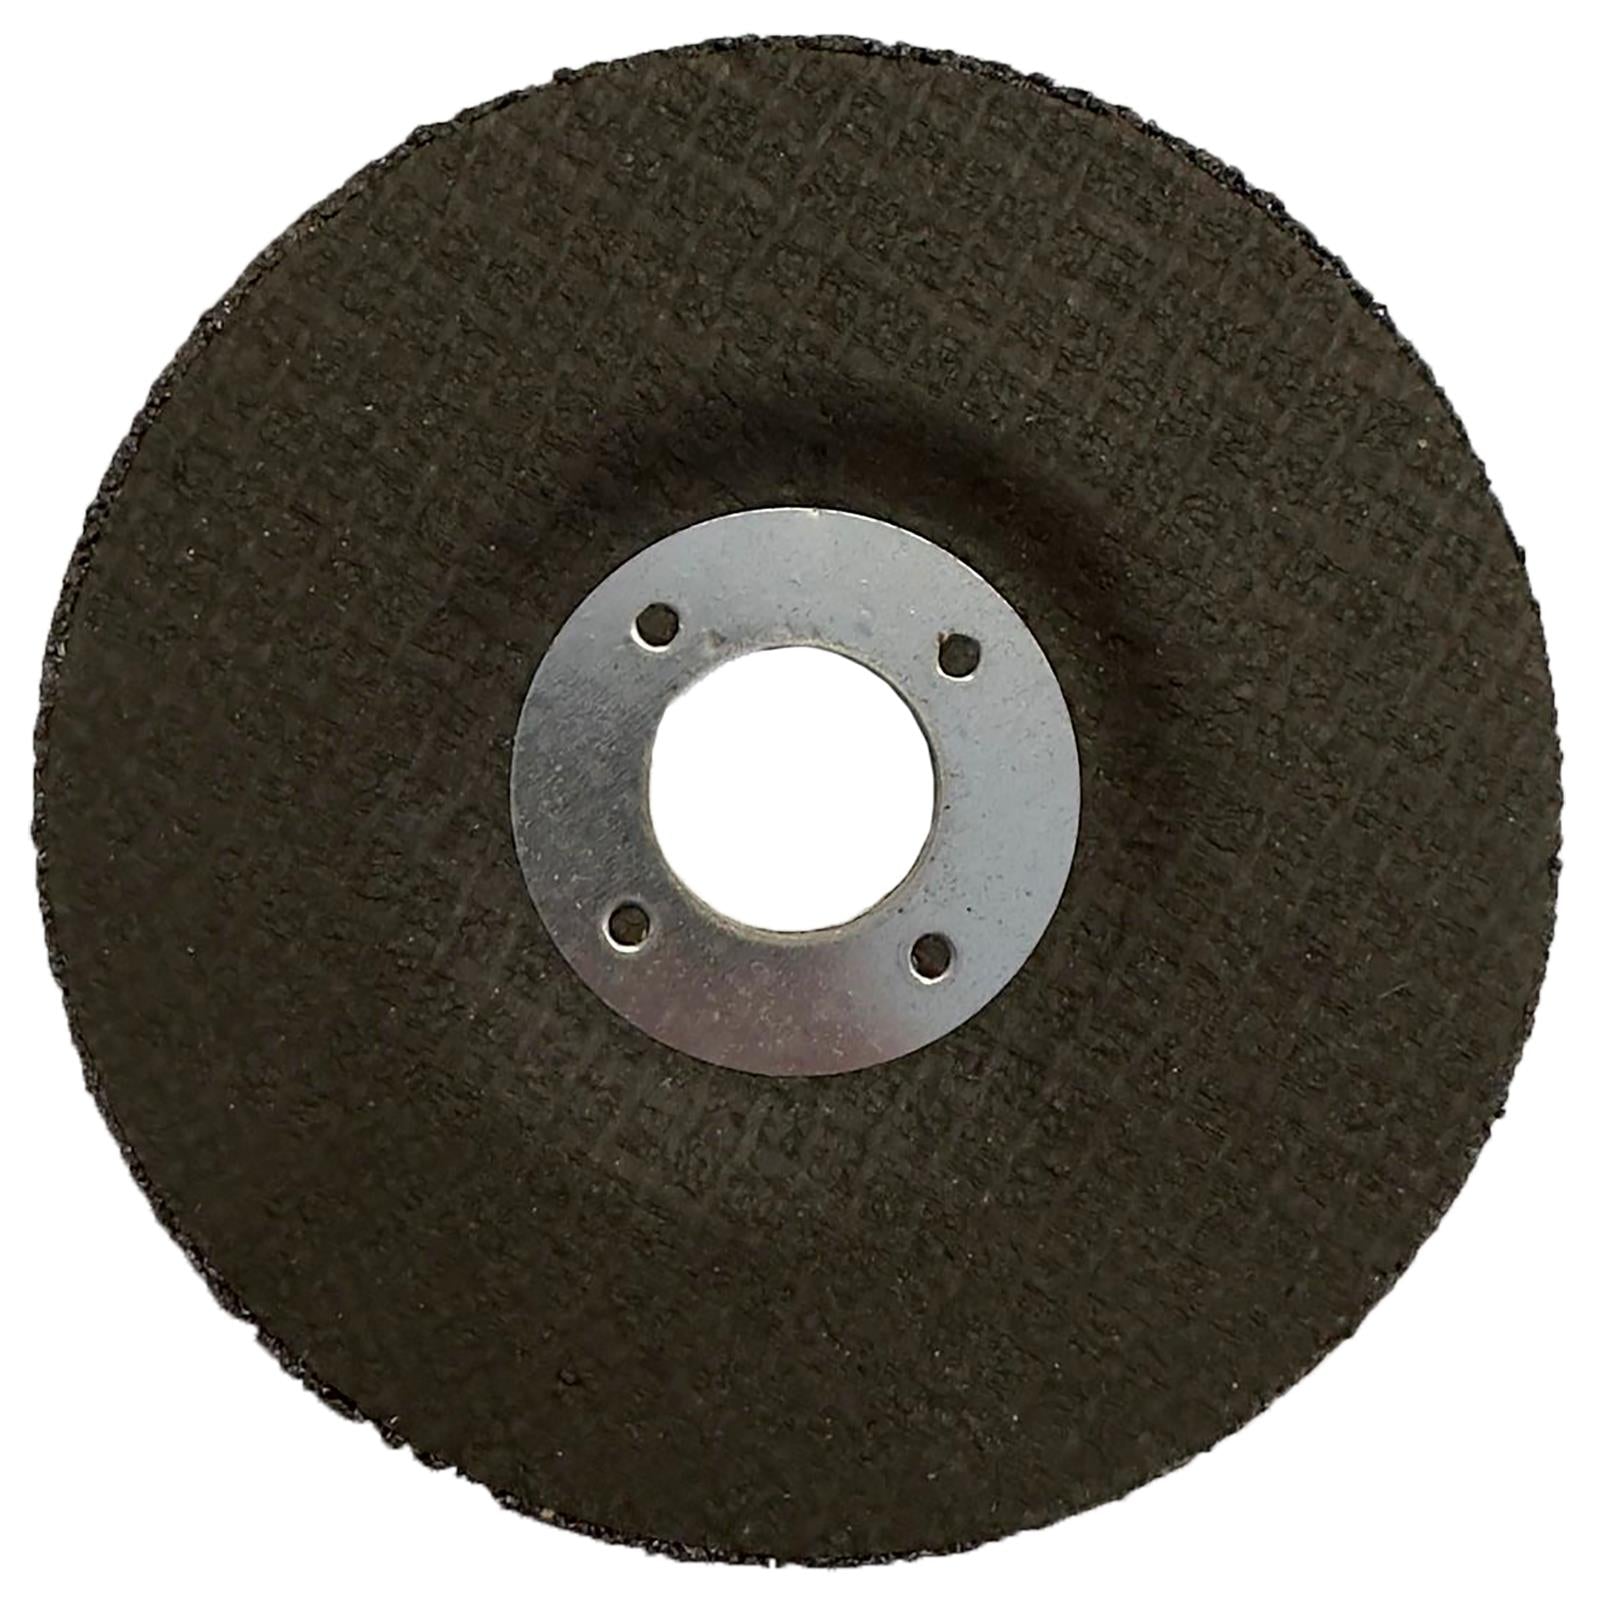 Klingspor Grinding Discs for Stone Concrete 115 x 6 x 22.23mm Depressed Centre C24R Supra